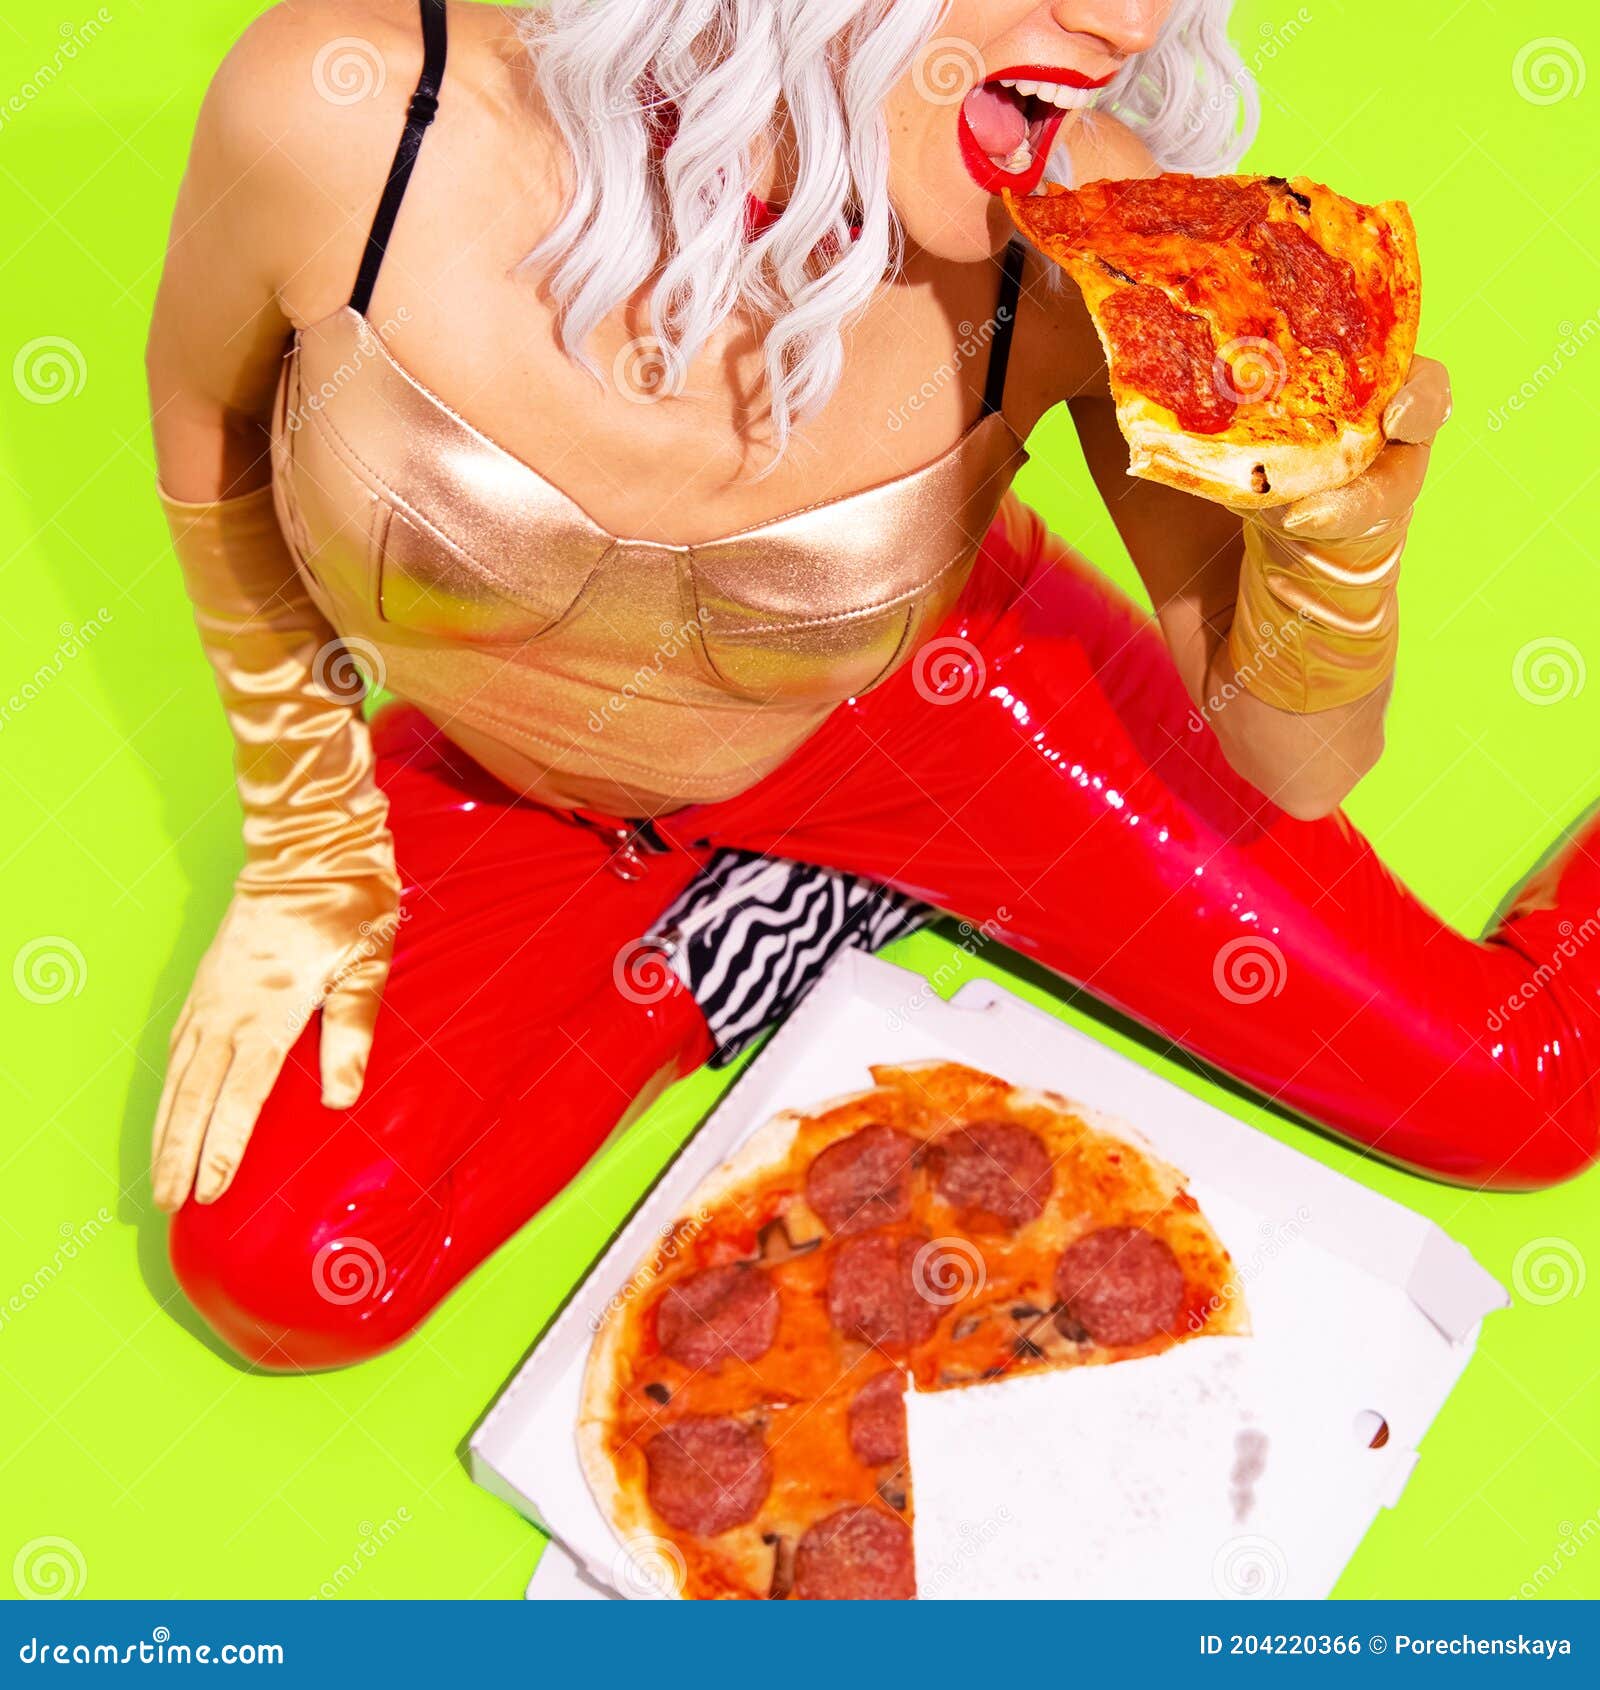 Fashion Creative Design. Minimal Art. Pizza Addict Hungry Blonde Girl. Food  Concept Stock Photo - Image of creative, face: 204220366